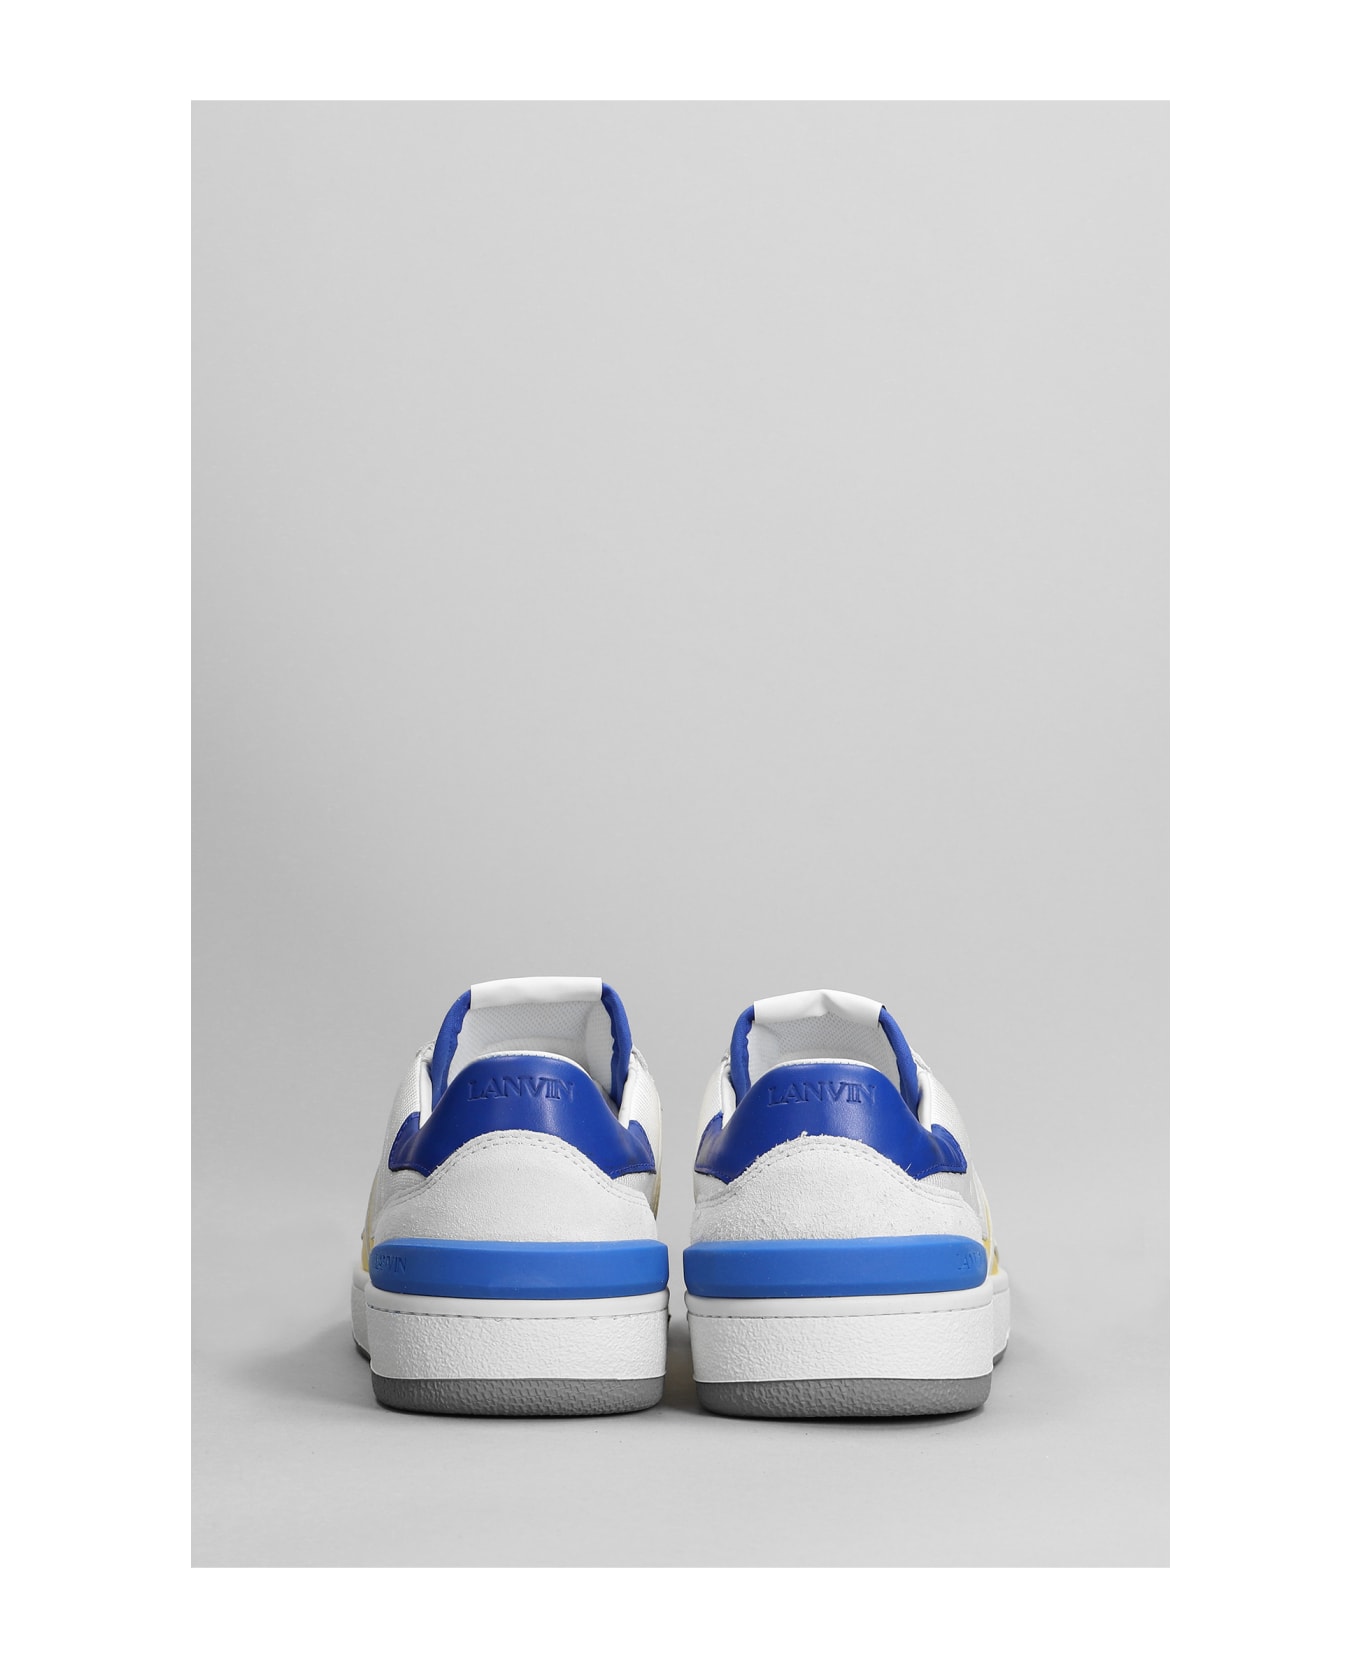 Lanvin Sneakers In Blue Leather - blue